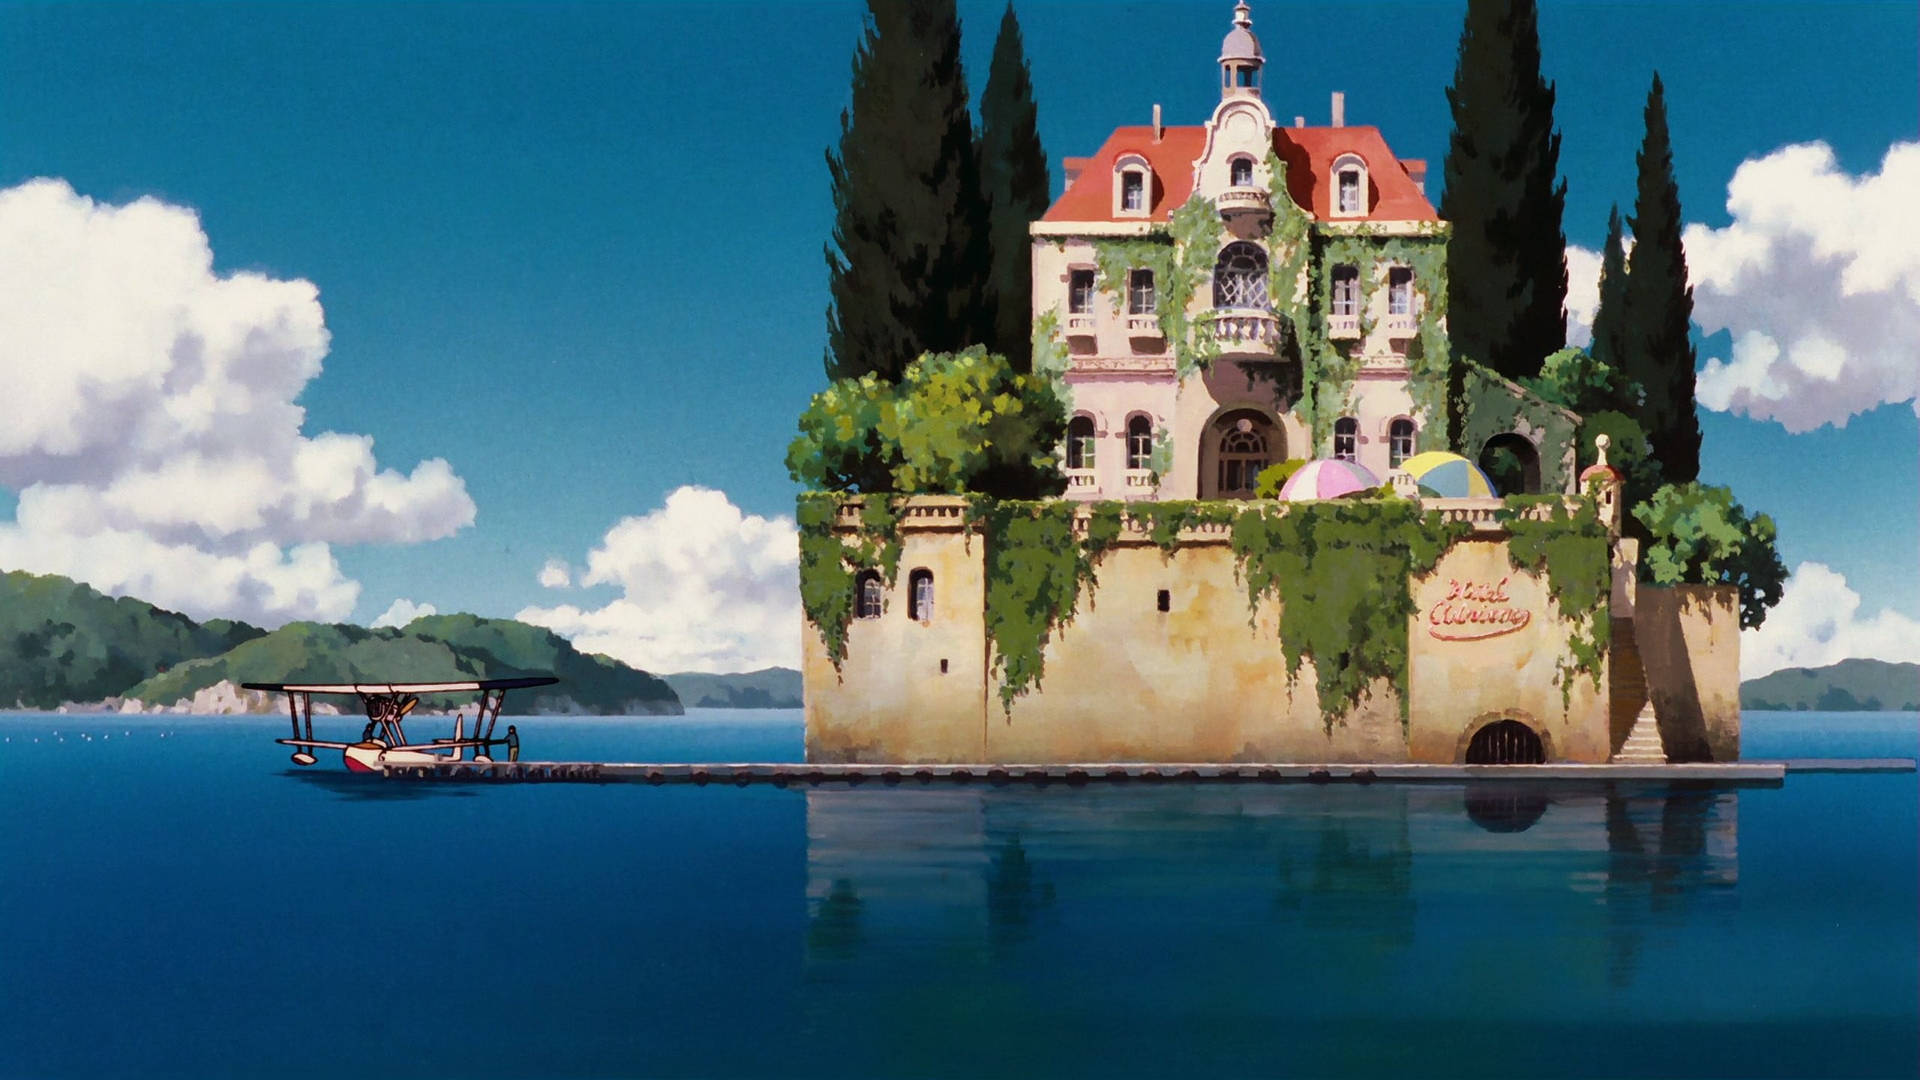 Studio Ghibli Scenery With Seaplane Wallpaper